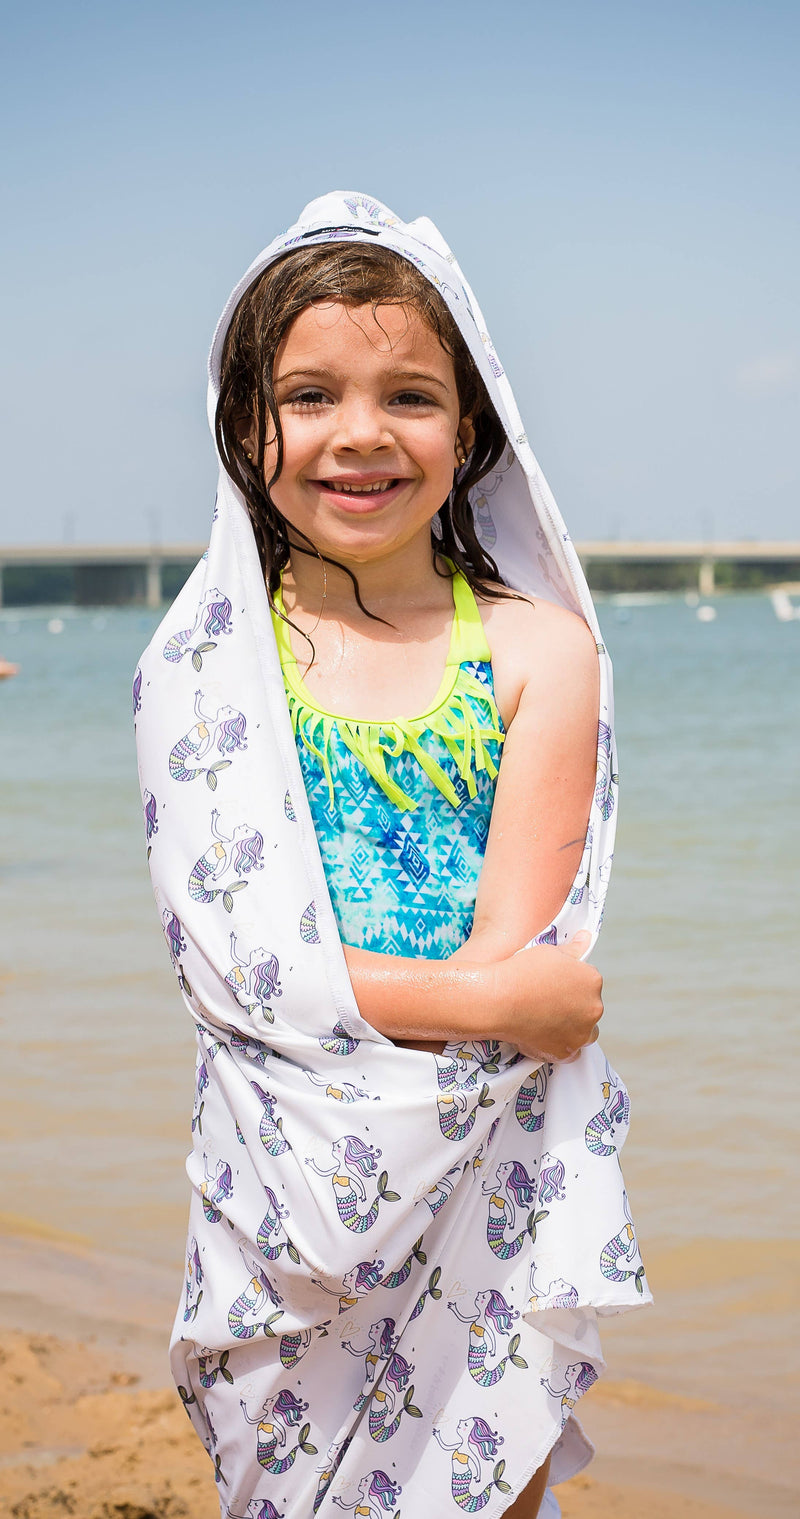 Luv Bug Co Hooded UPF 50+Sunscreen Towel - Mermaids